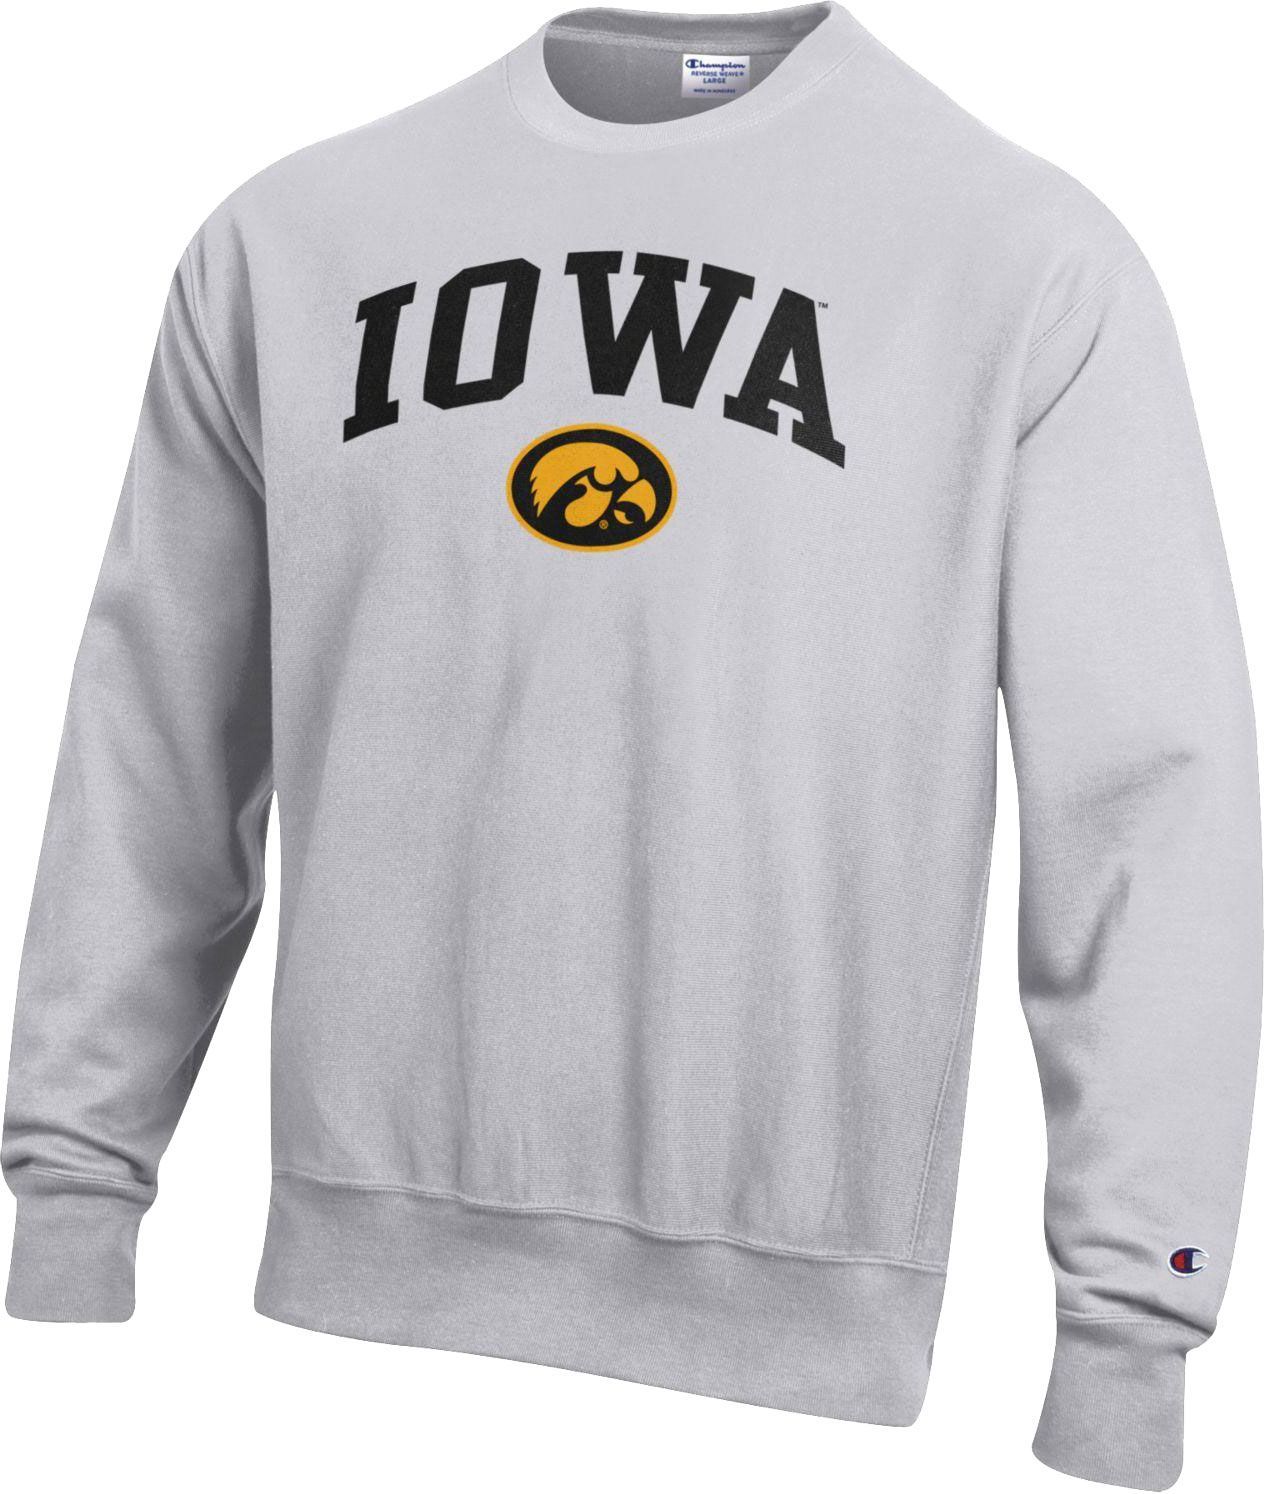 Champion Men's Iowa Hawkeyes Grey Reverse Weave Crew Sweatshirt, Large, Gray | Dick's Sporting Goods